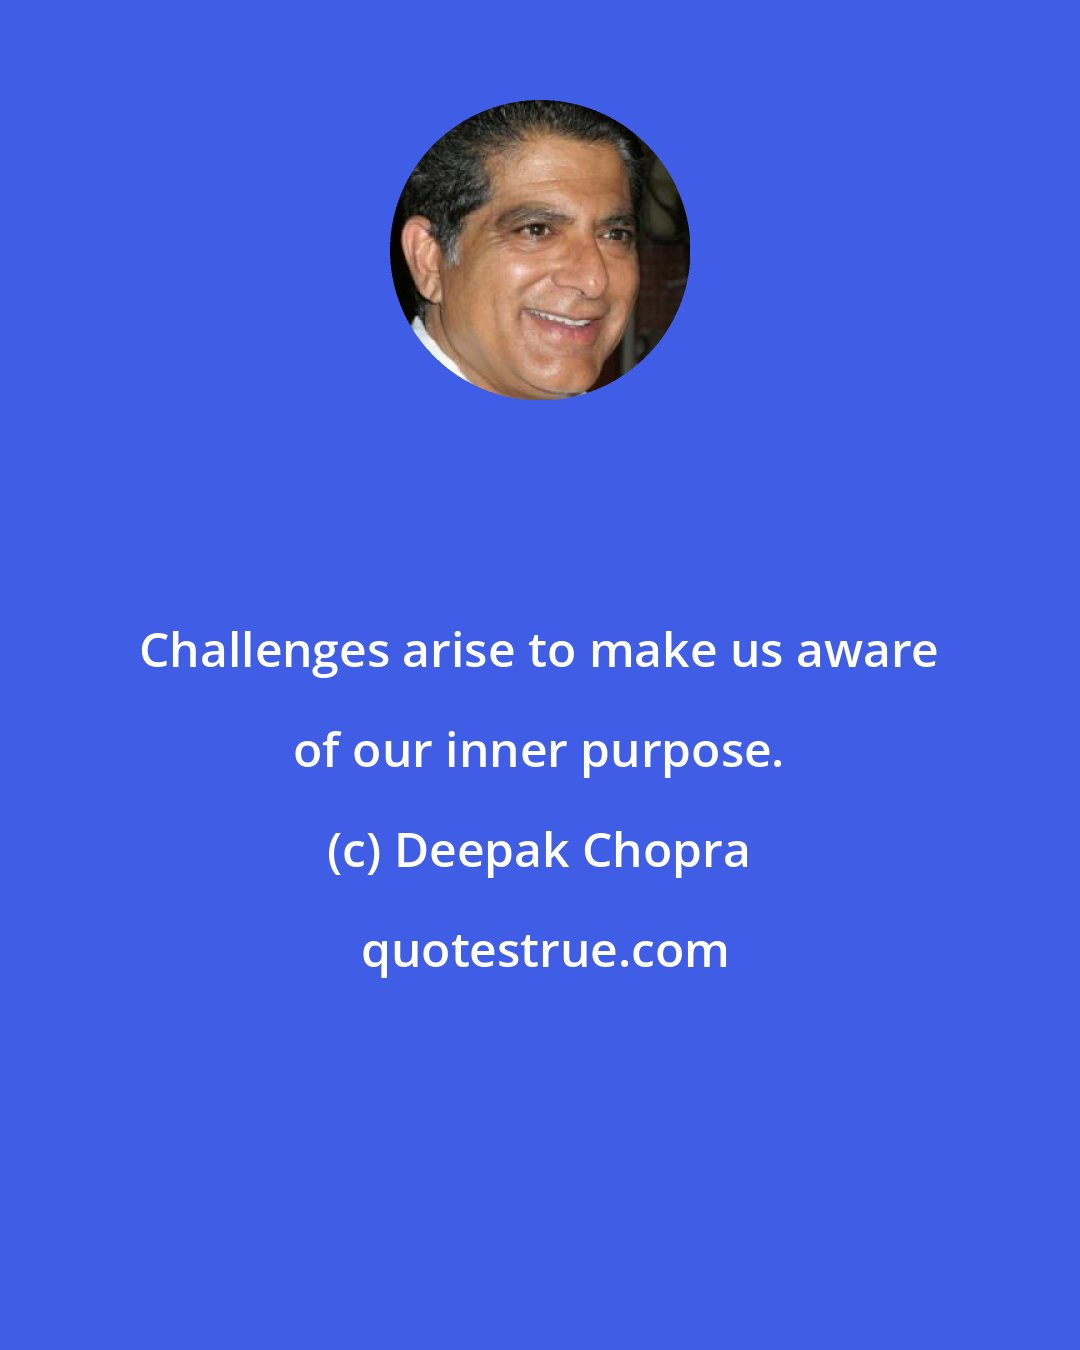 Deepak Chopra: Challenges arise to make us aware of our inner purpose.